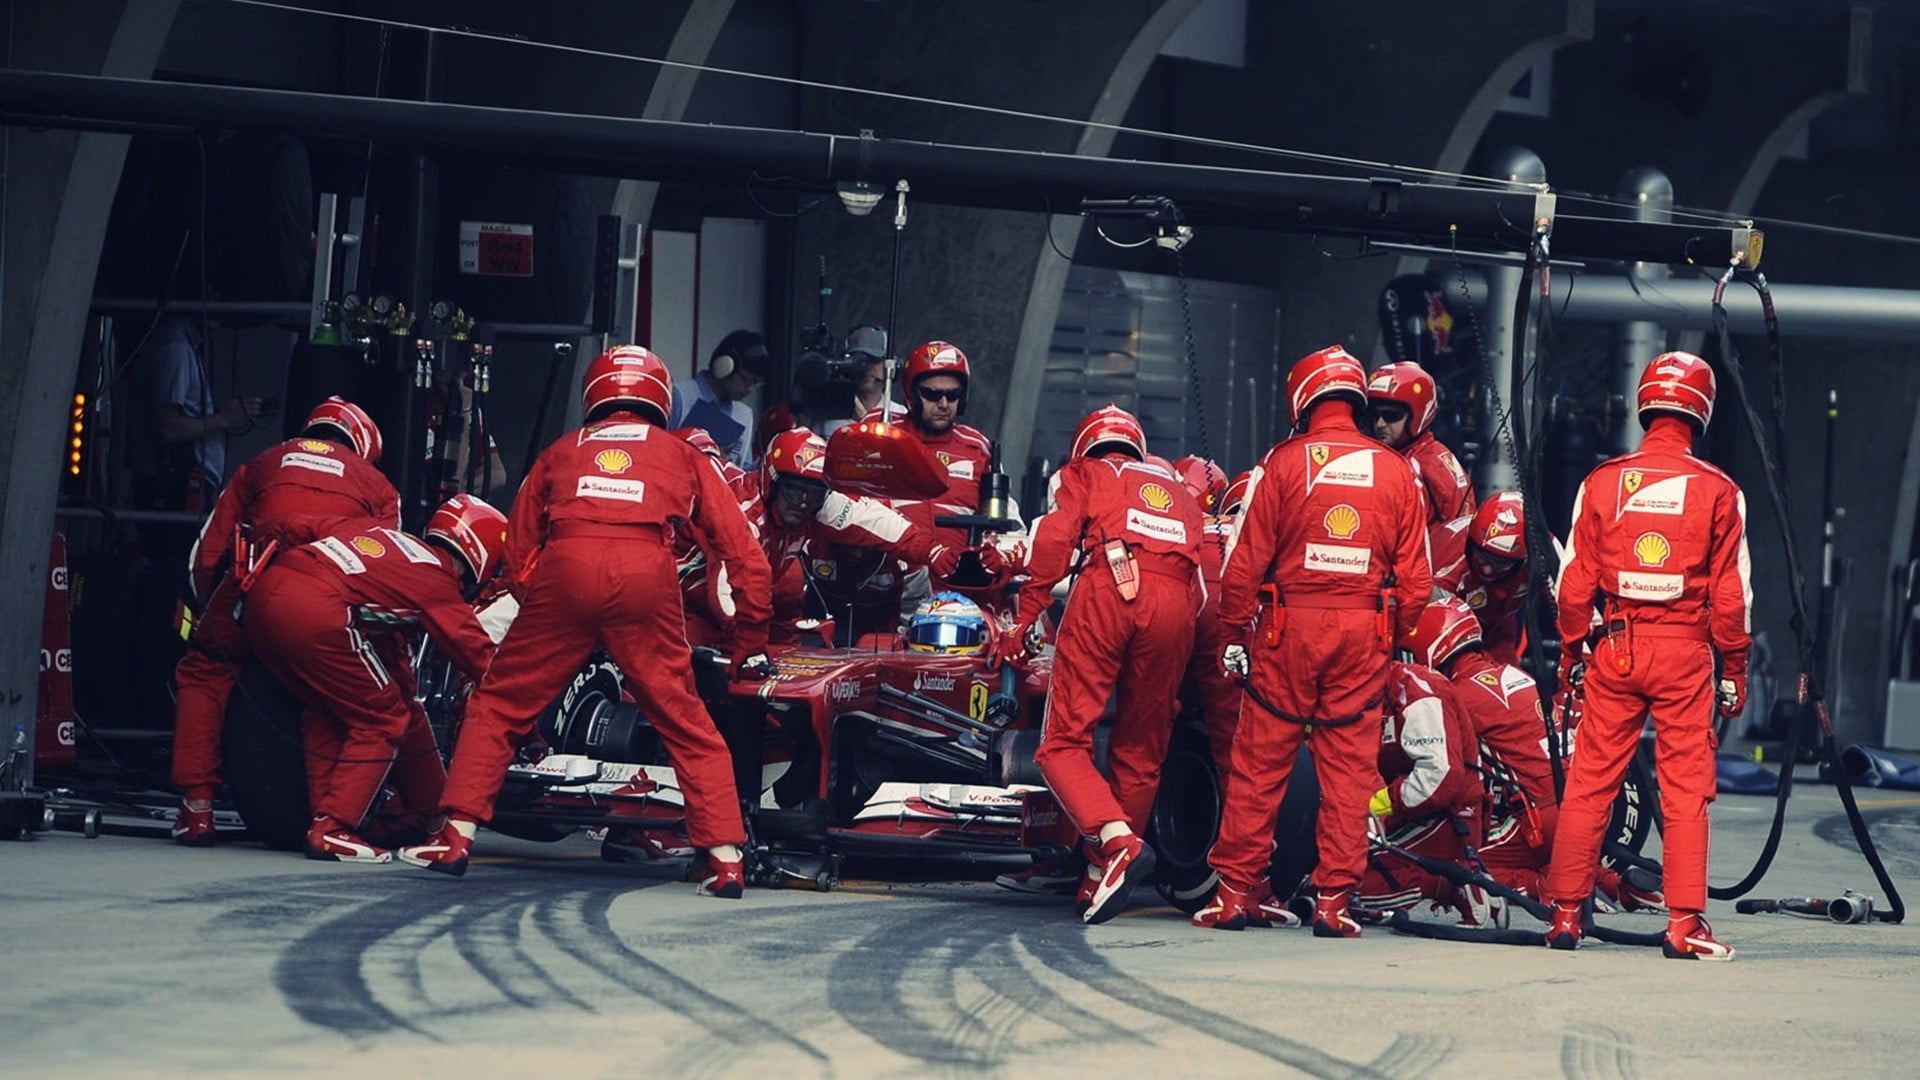 red and white F1 race car, Ferrari, Fernando Alonso, Formula 1, Pit stop